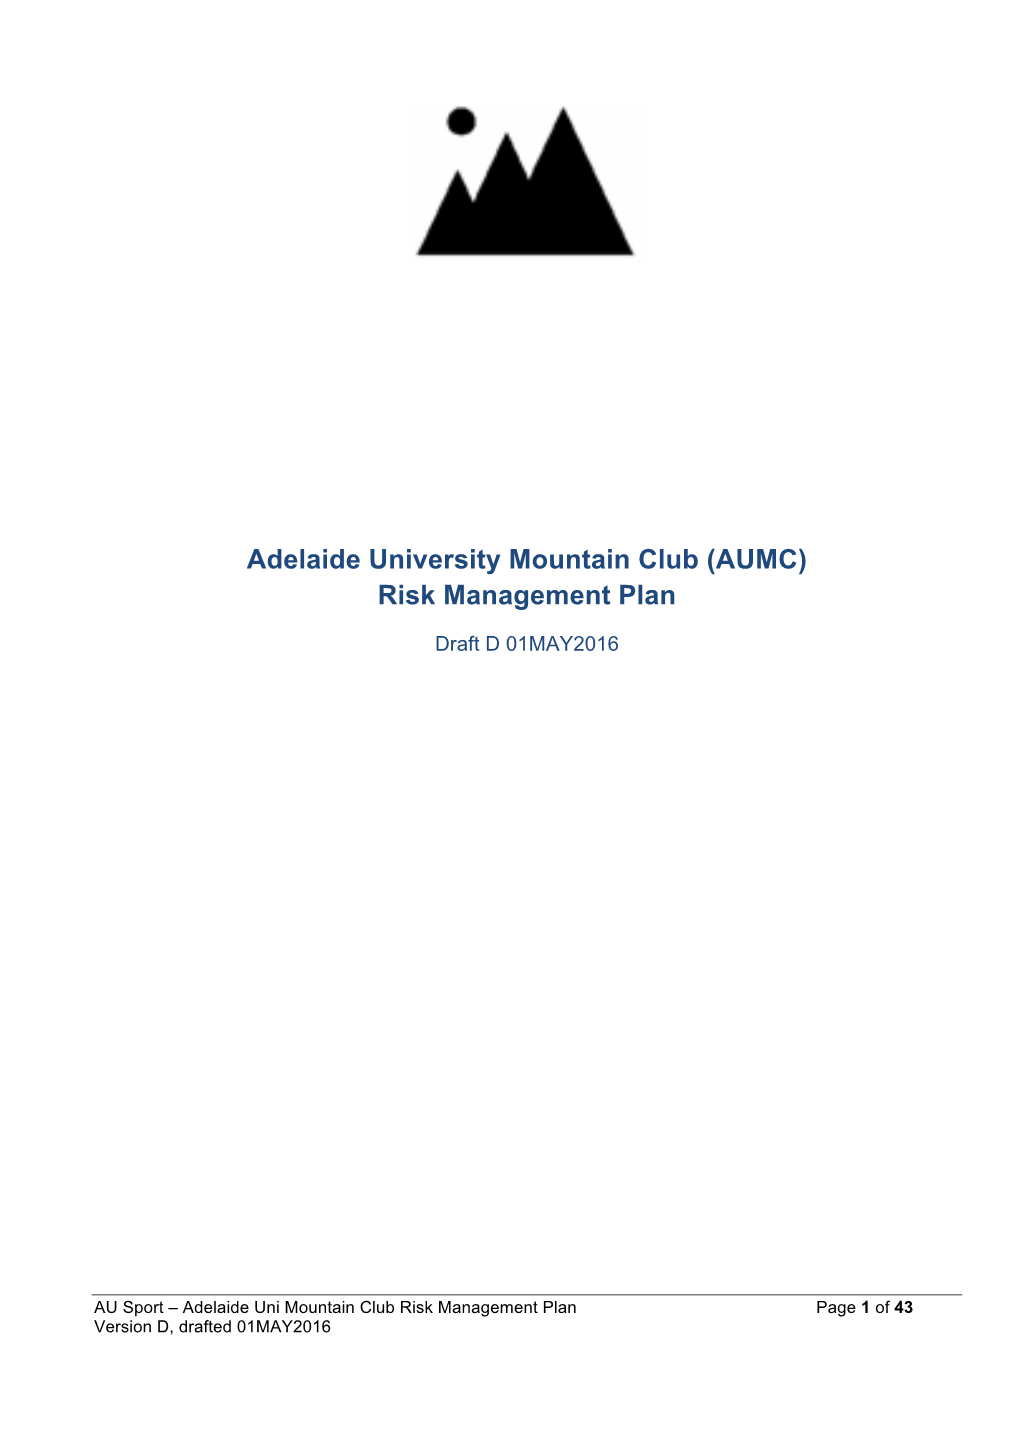 Adelaide University Mountain Club (AUMC) Risk Management Plan